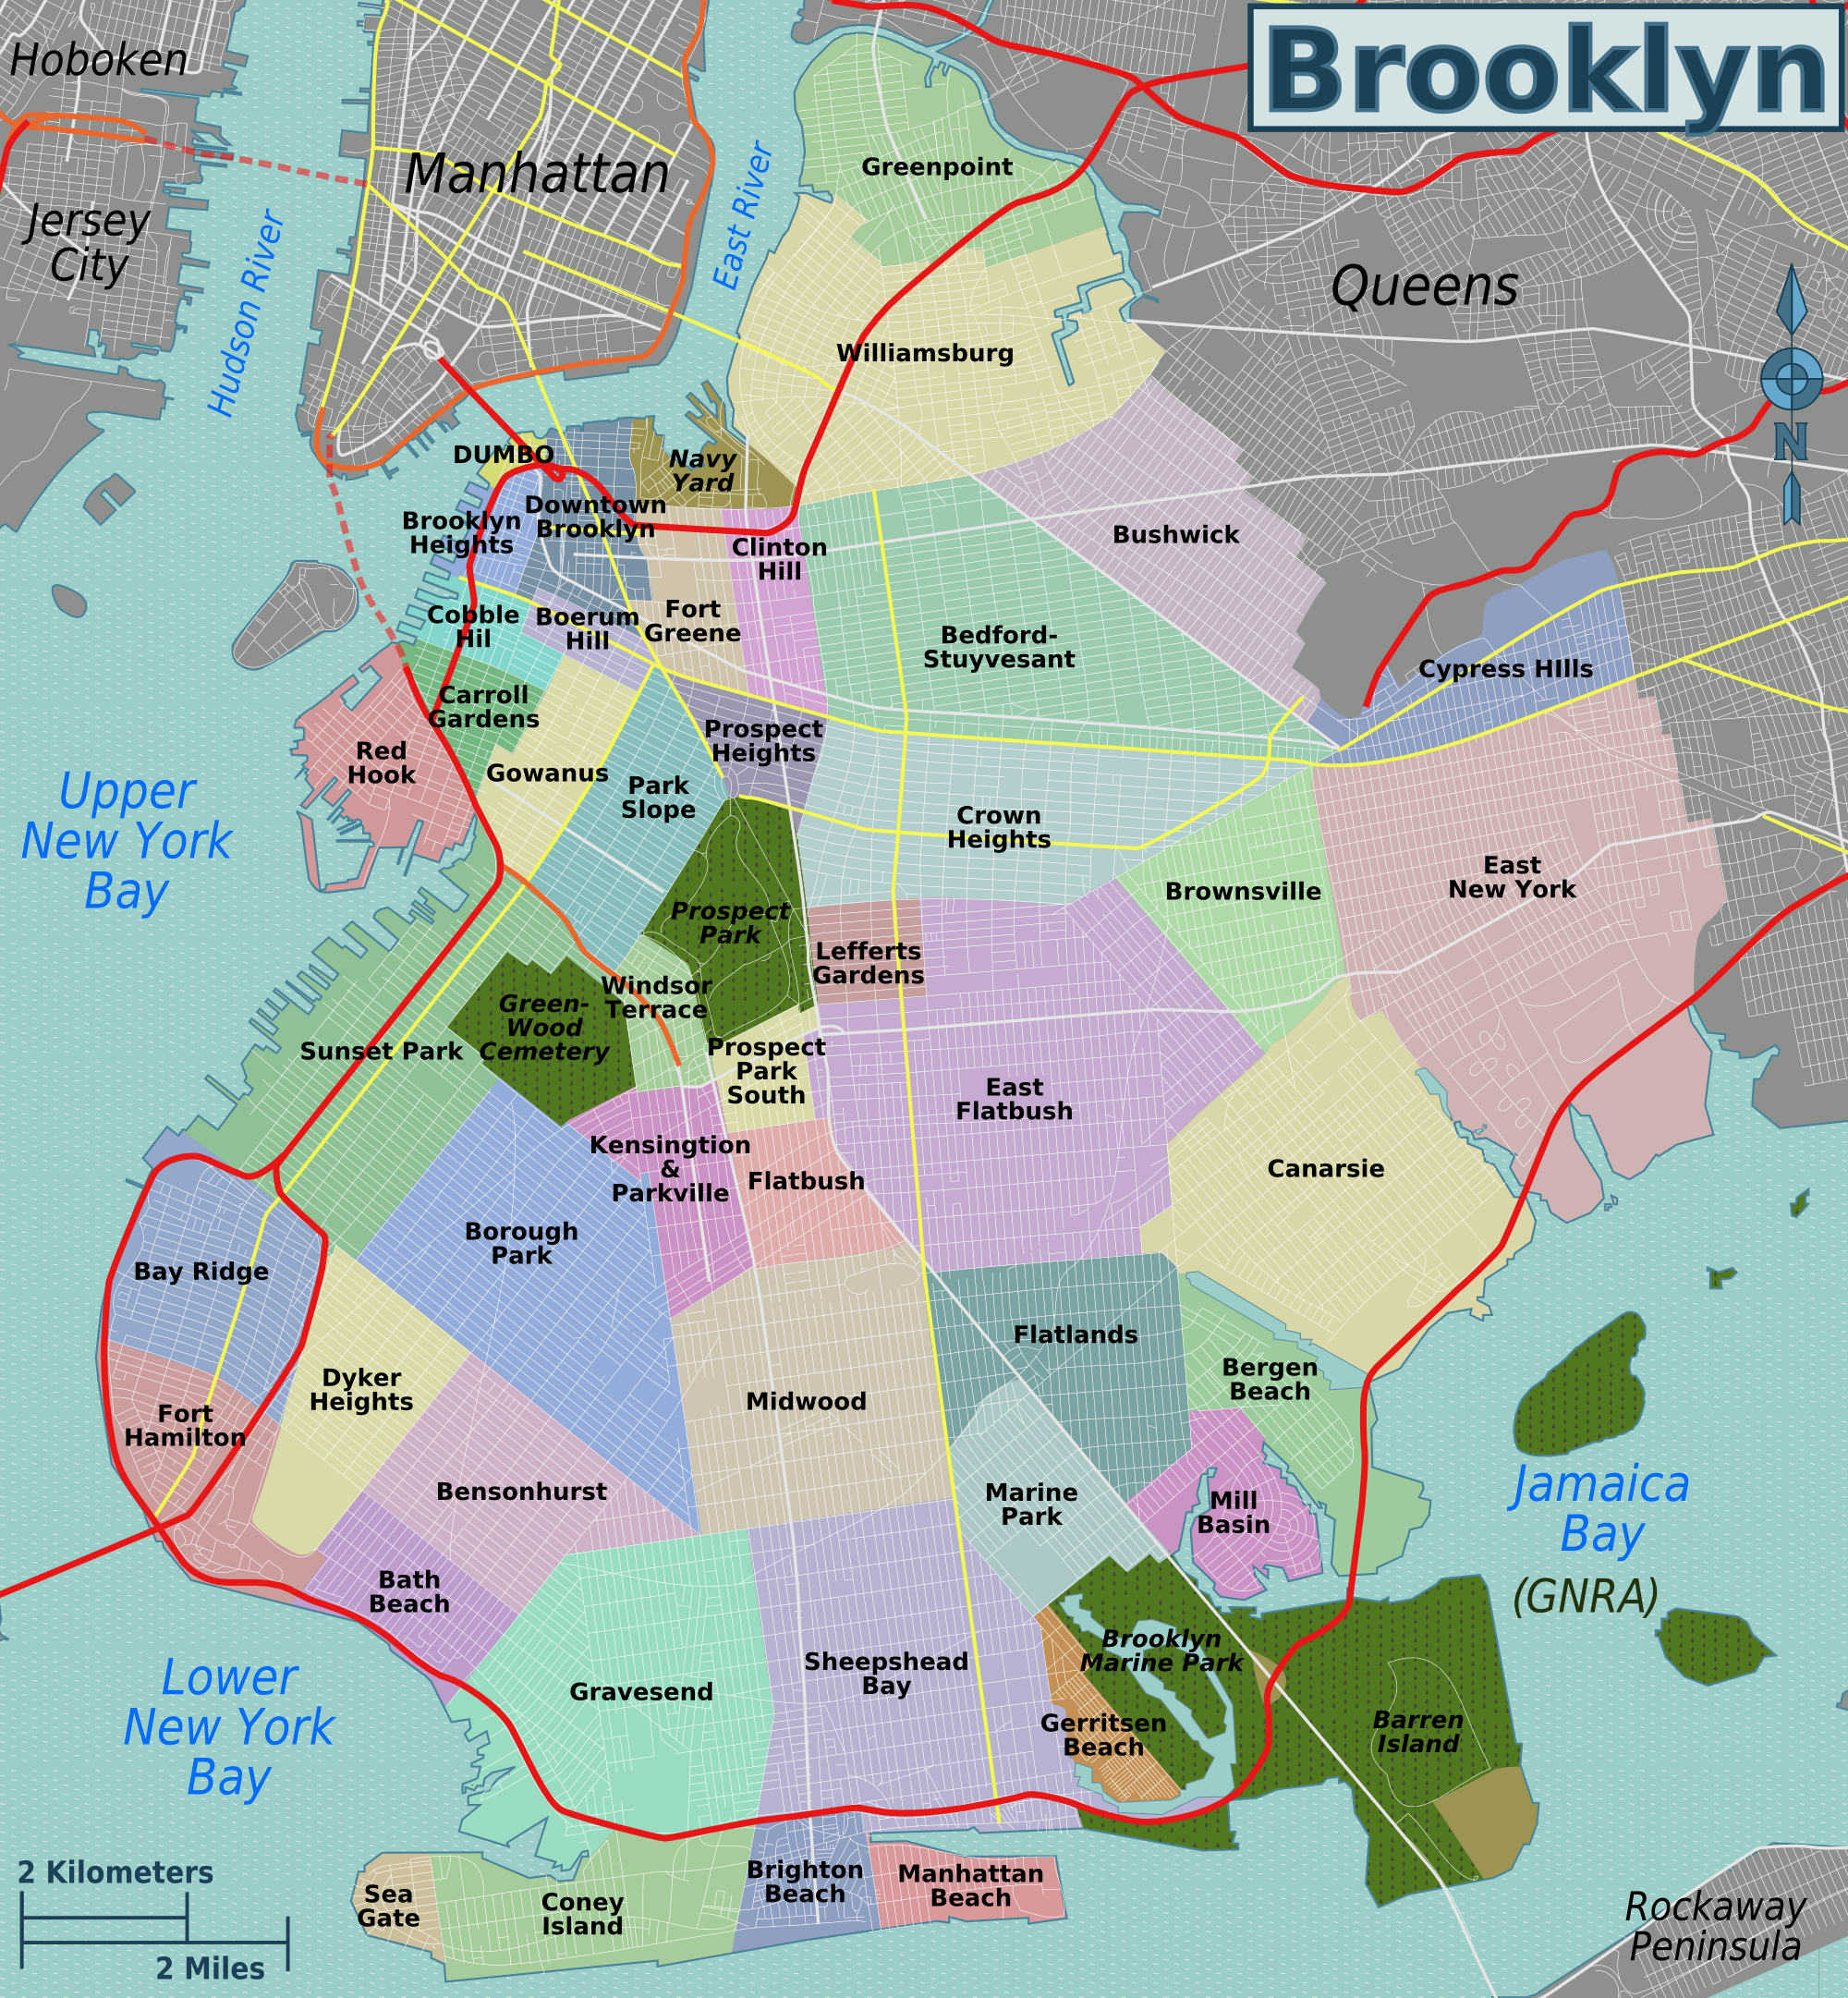 http://upload.wikimedia.org/wikipedia/commons/f/f2/Brooklyn_neighborhoods_map.png